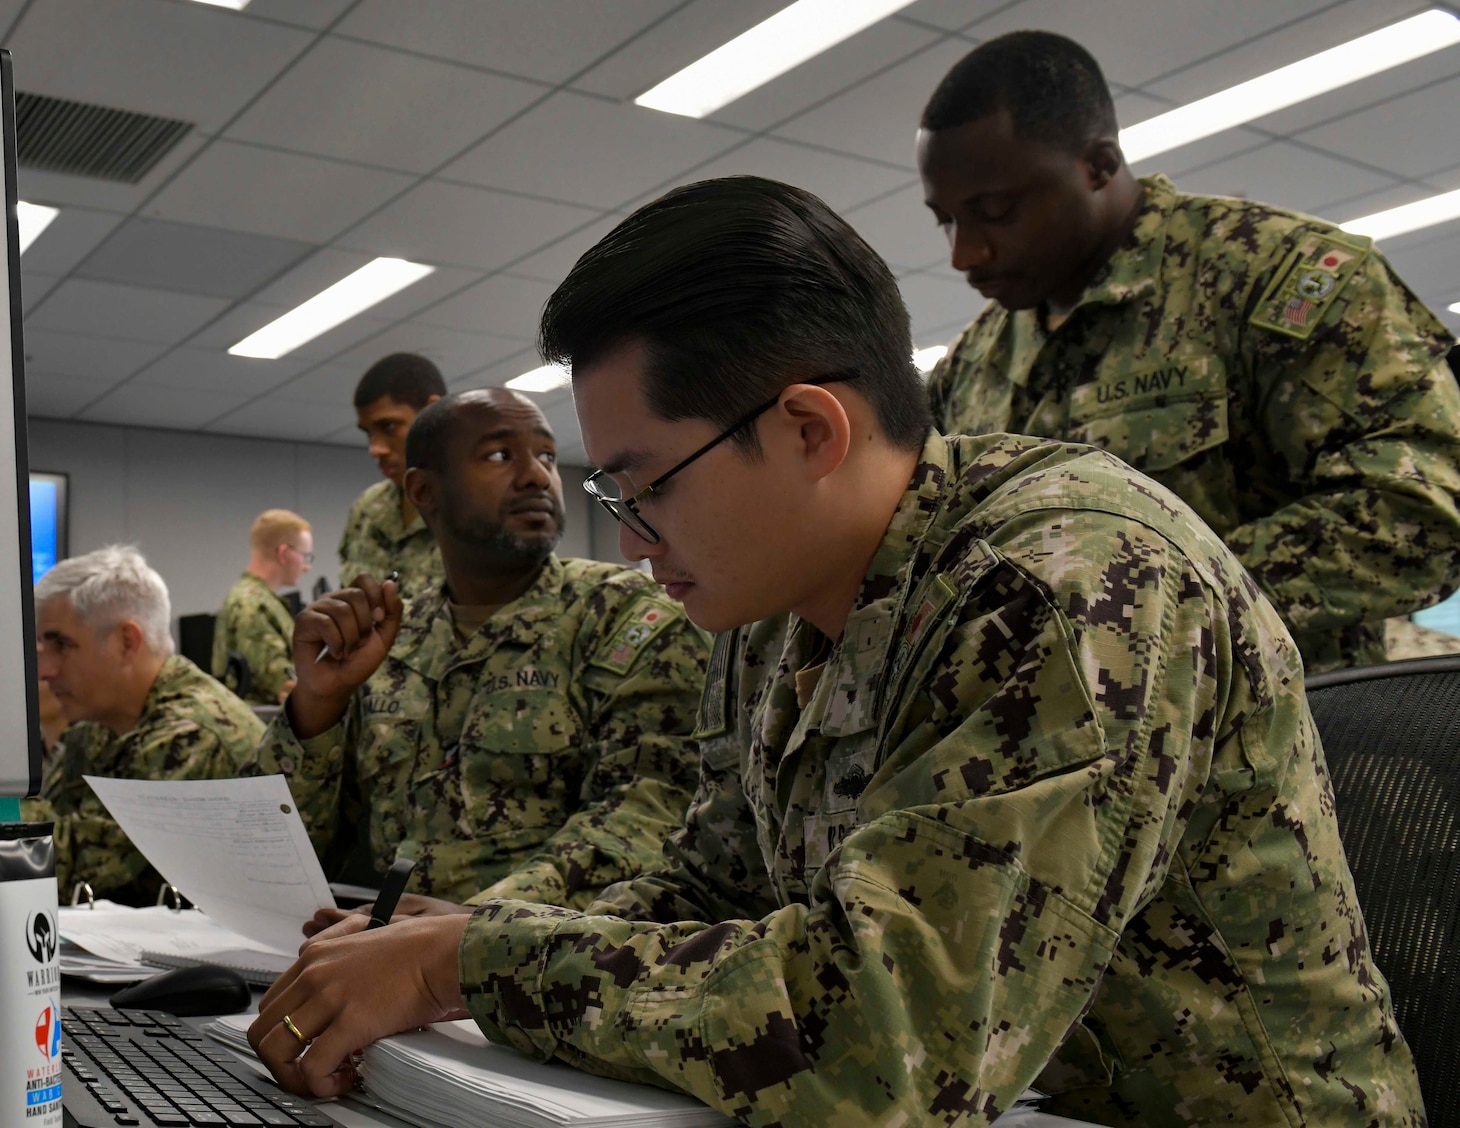 NR CNFJ/CNRJ 文化ミッションの準備を向上させるための船員訓練 > 米国太平洋艦隊 > ニュース